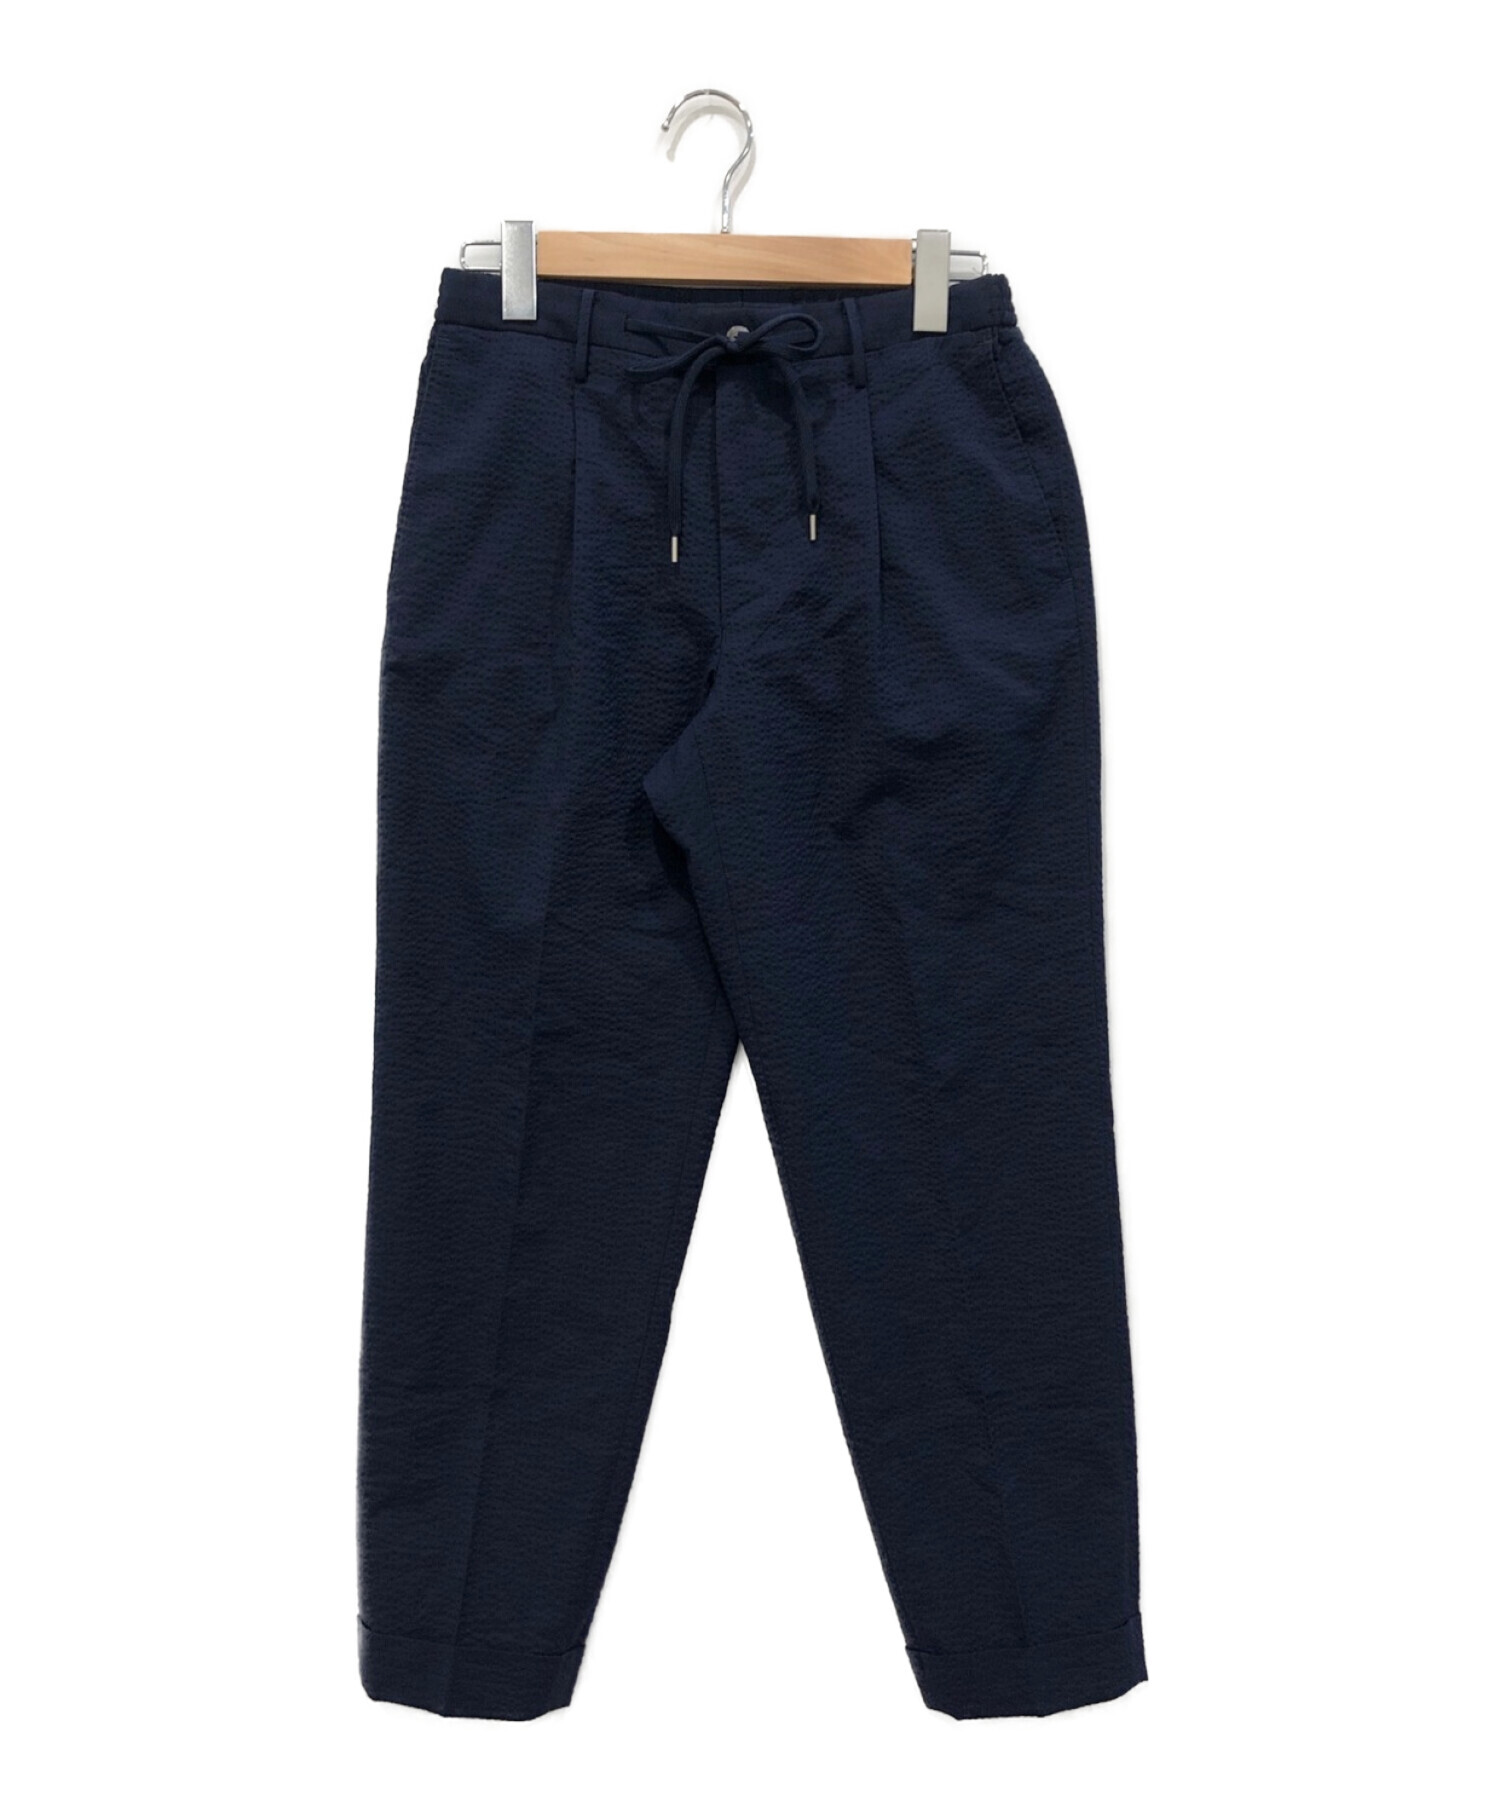 +CLOTHET (クロスクローゼット) Seersucker Easy Trousers ネイビー サイズ:1